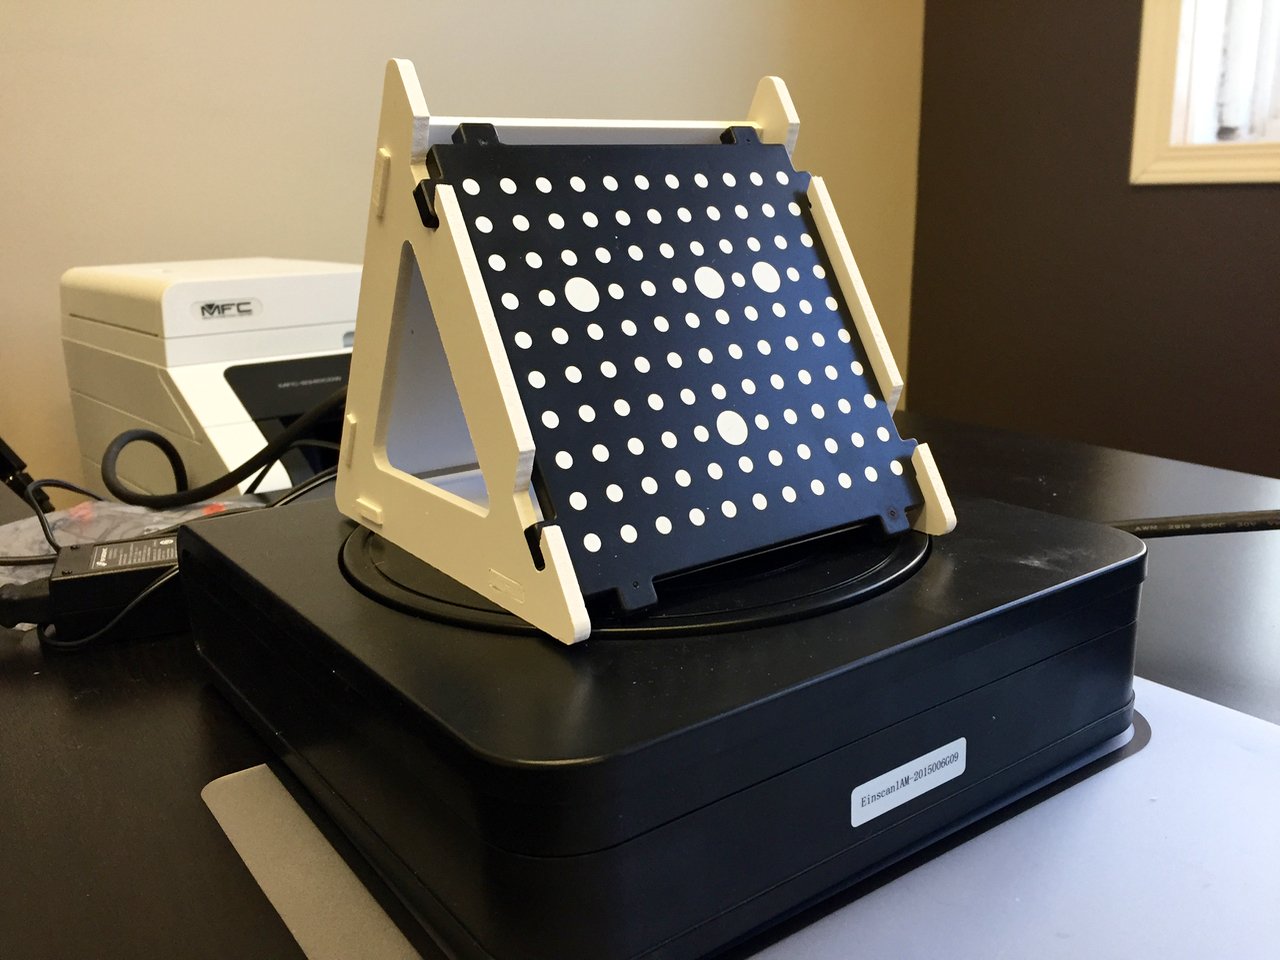  The calibration box used on the Afinia ES360 desktop 3D scanner 